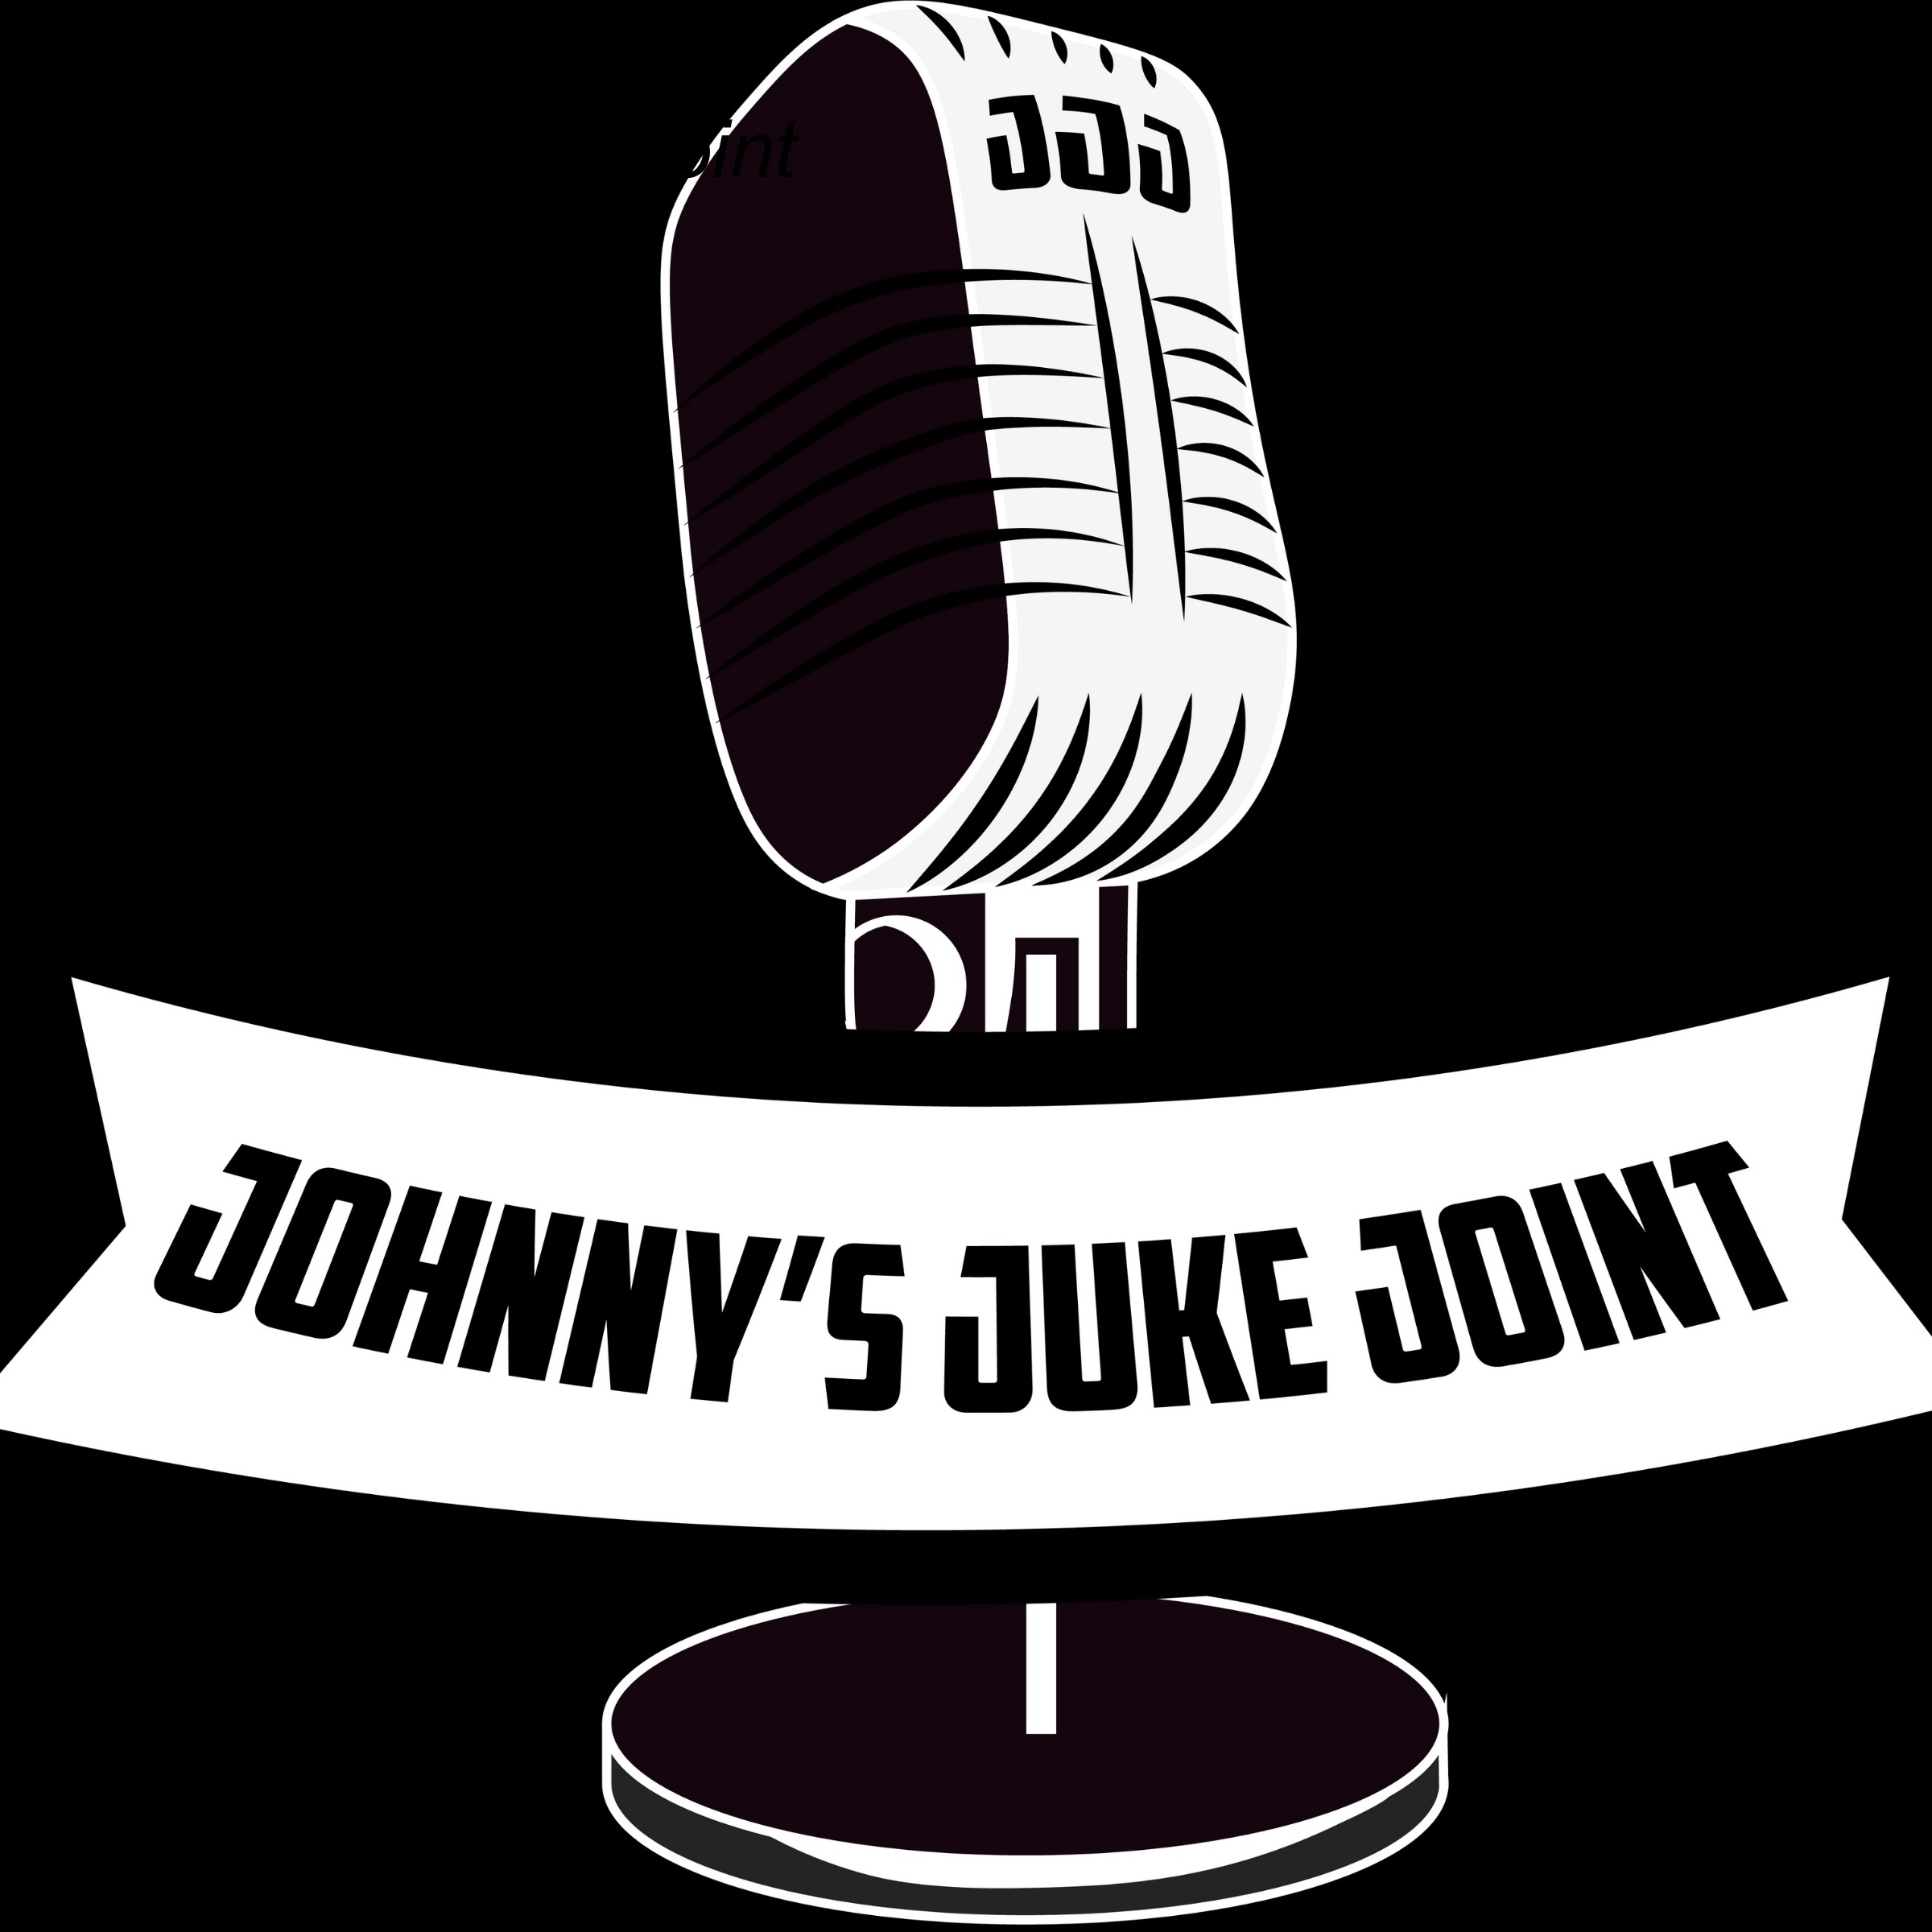 Johnny's Juke Joint